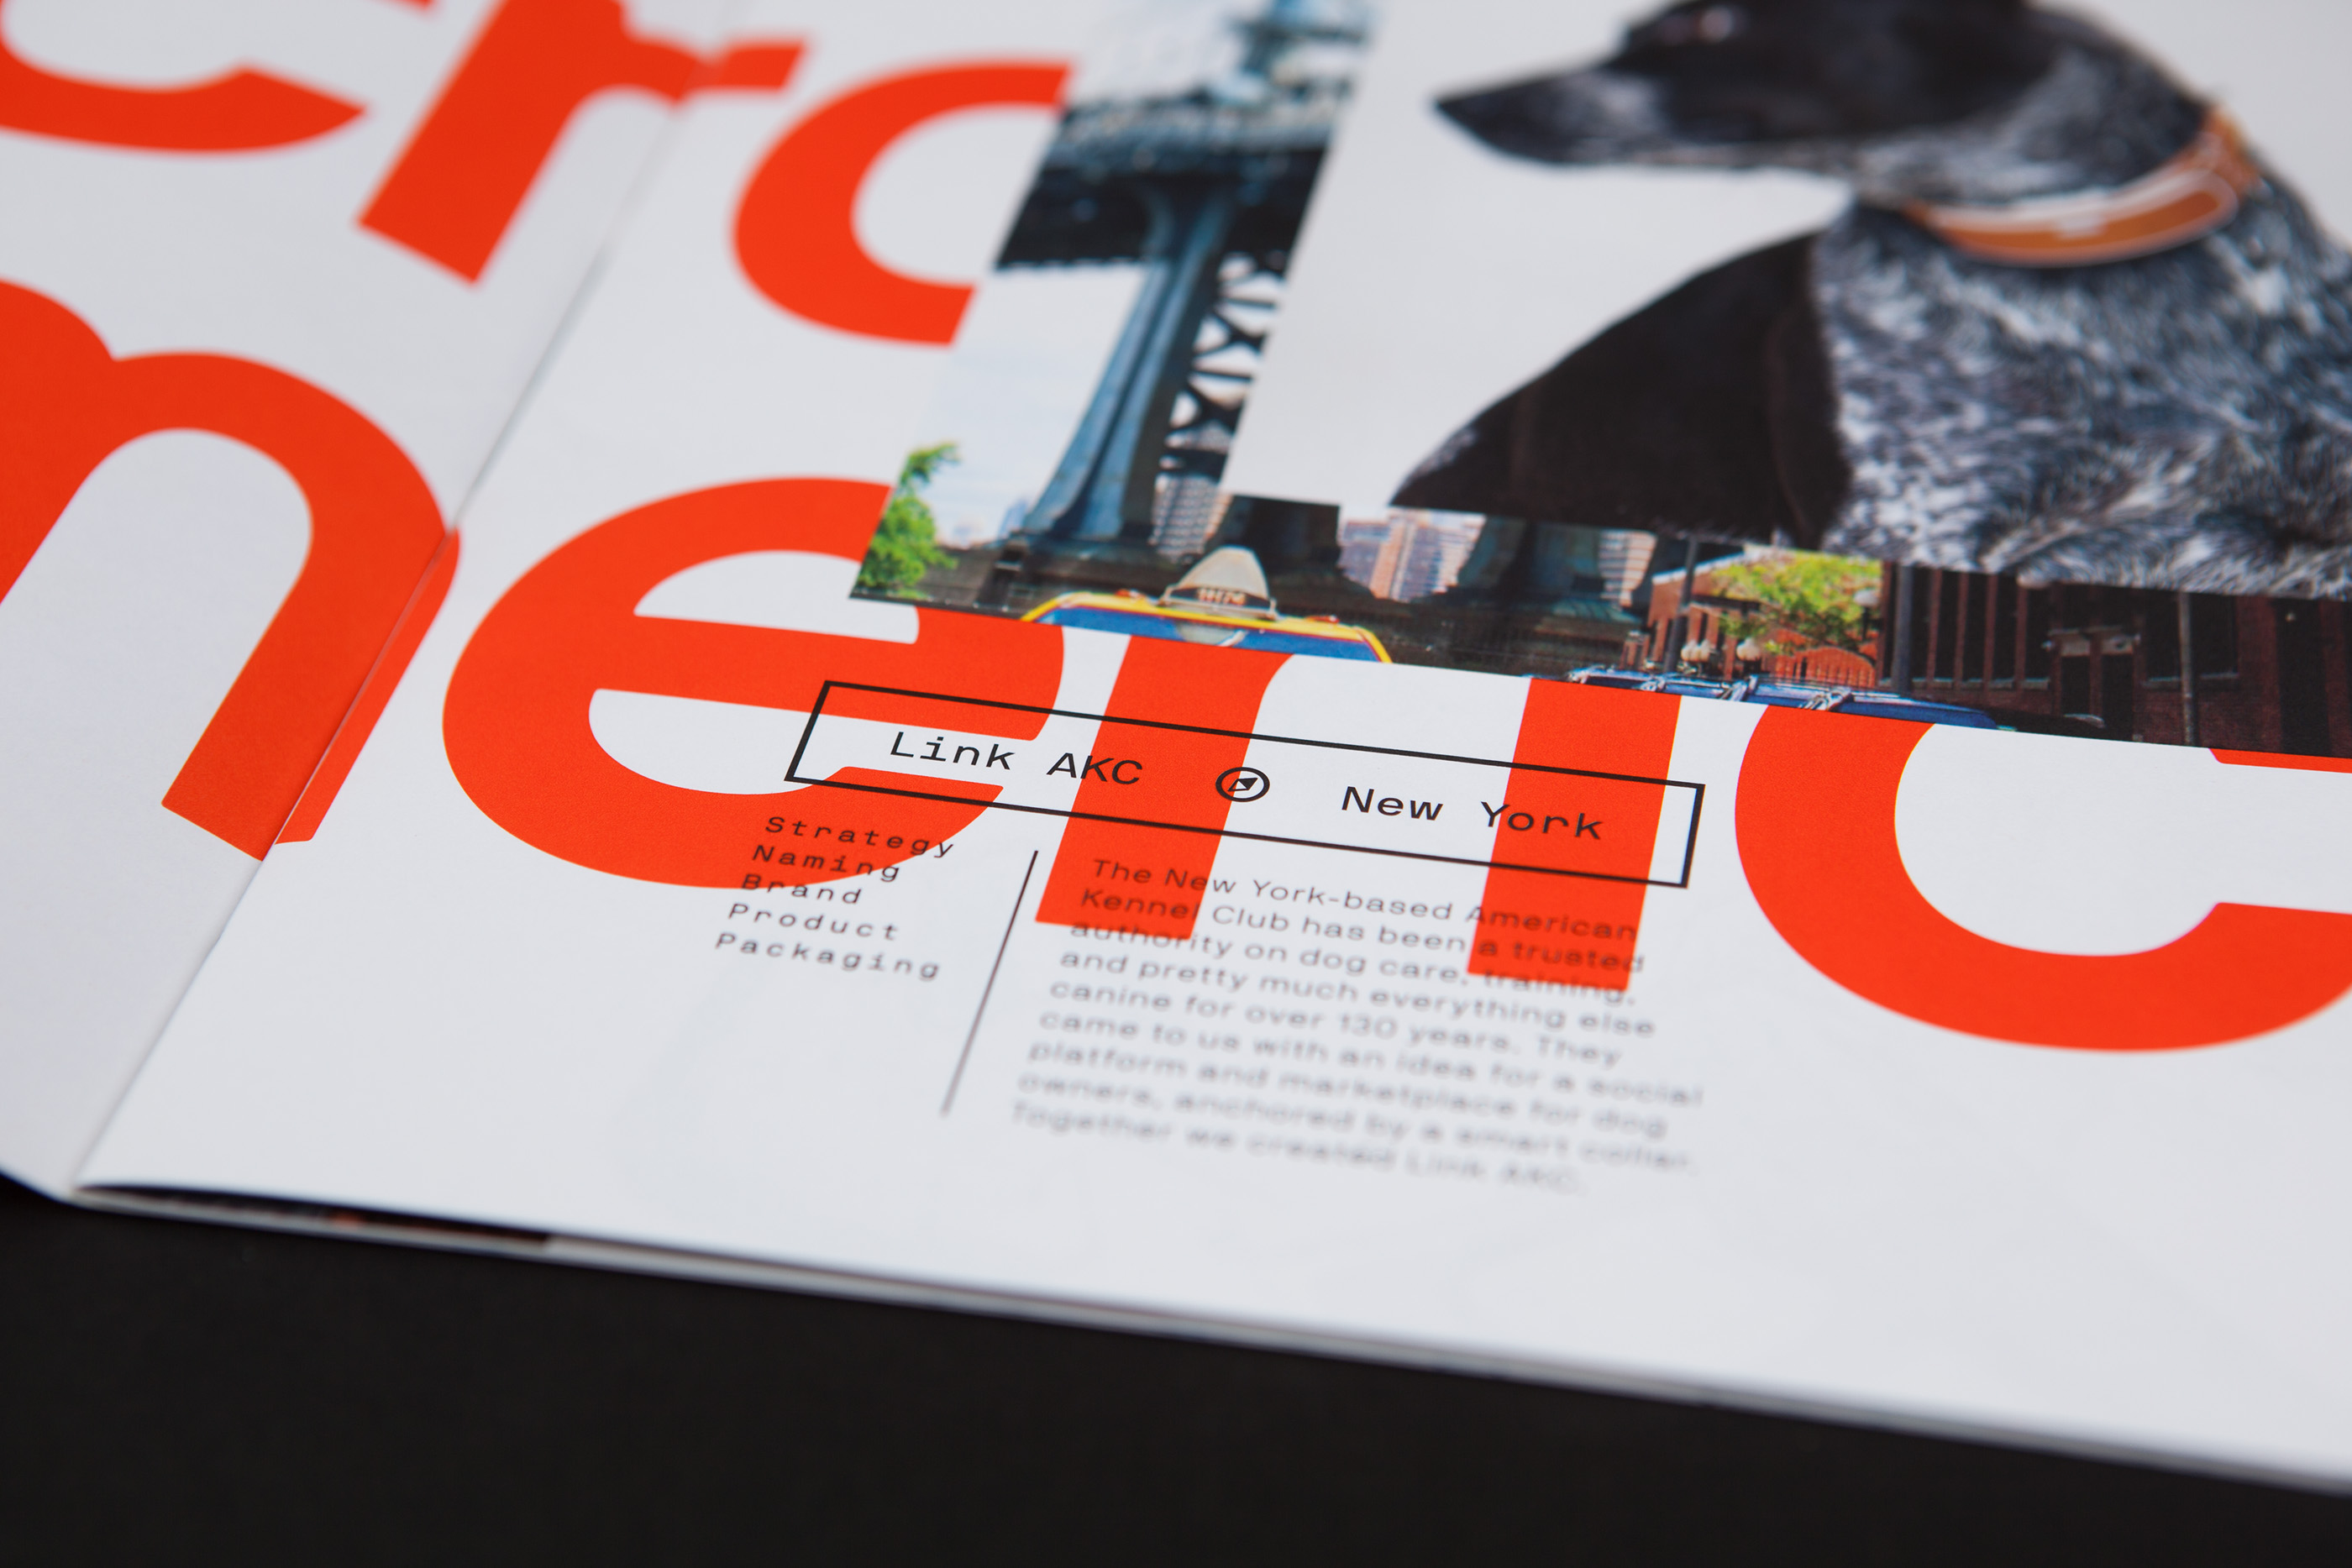 Brochure design idea #8: That 90s Look is Coming Back - Design Across America Brochure